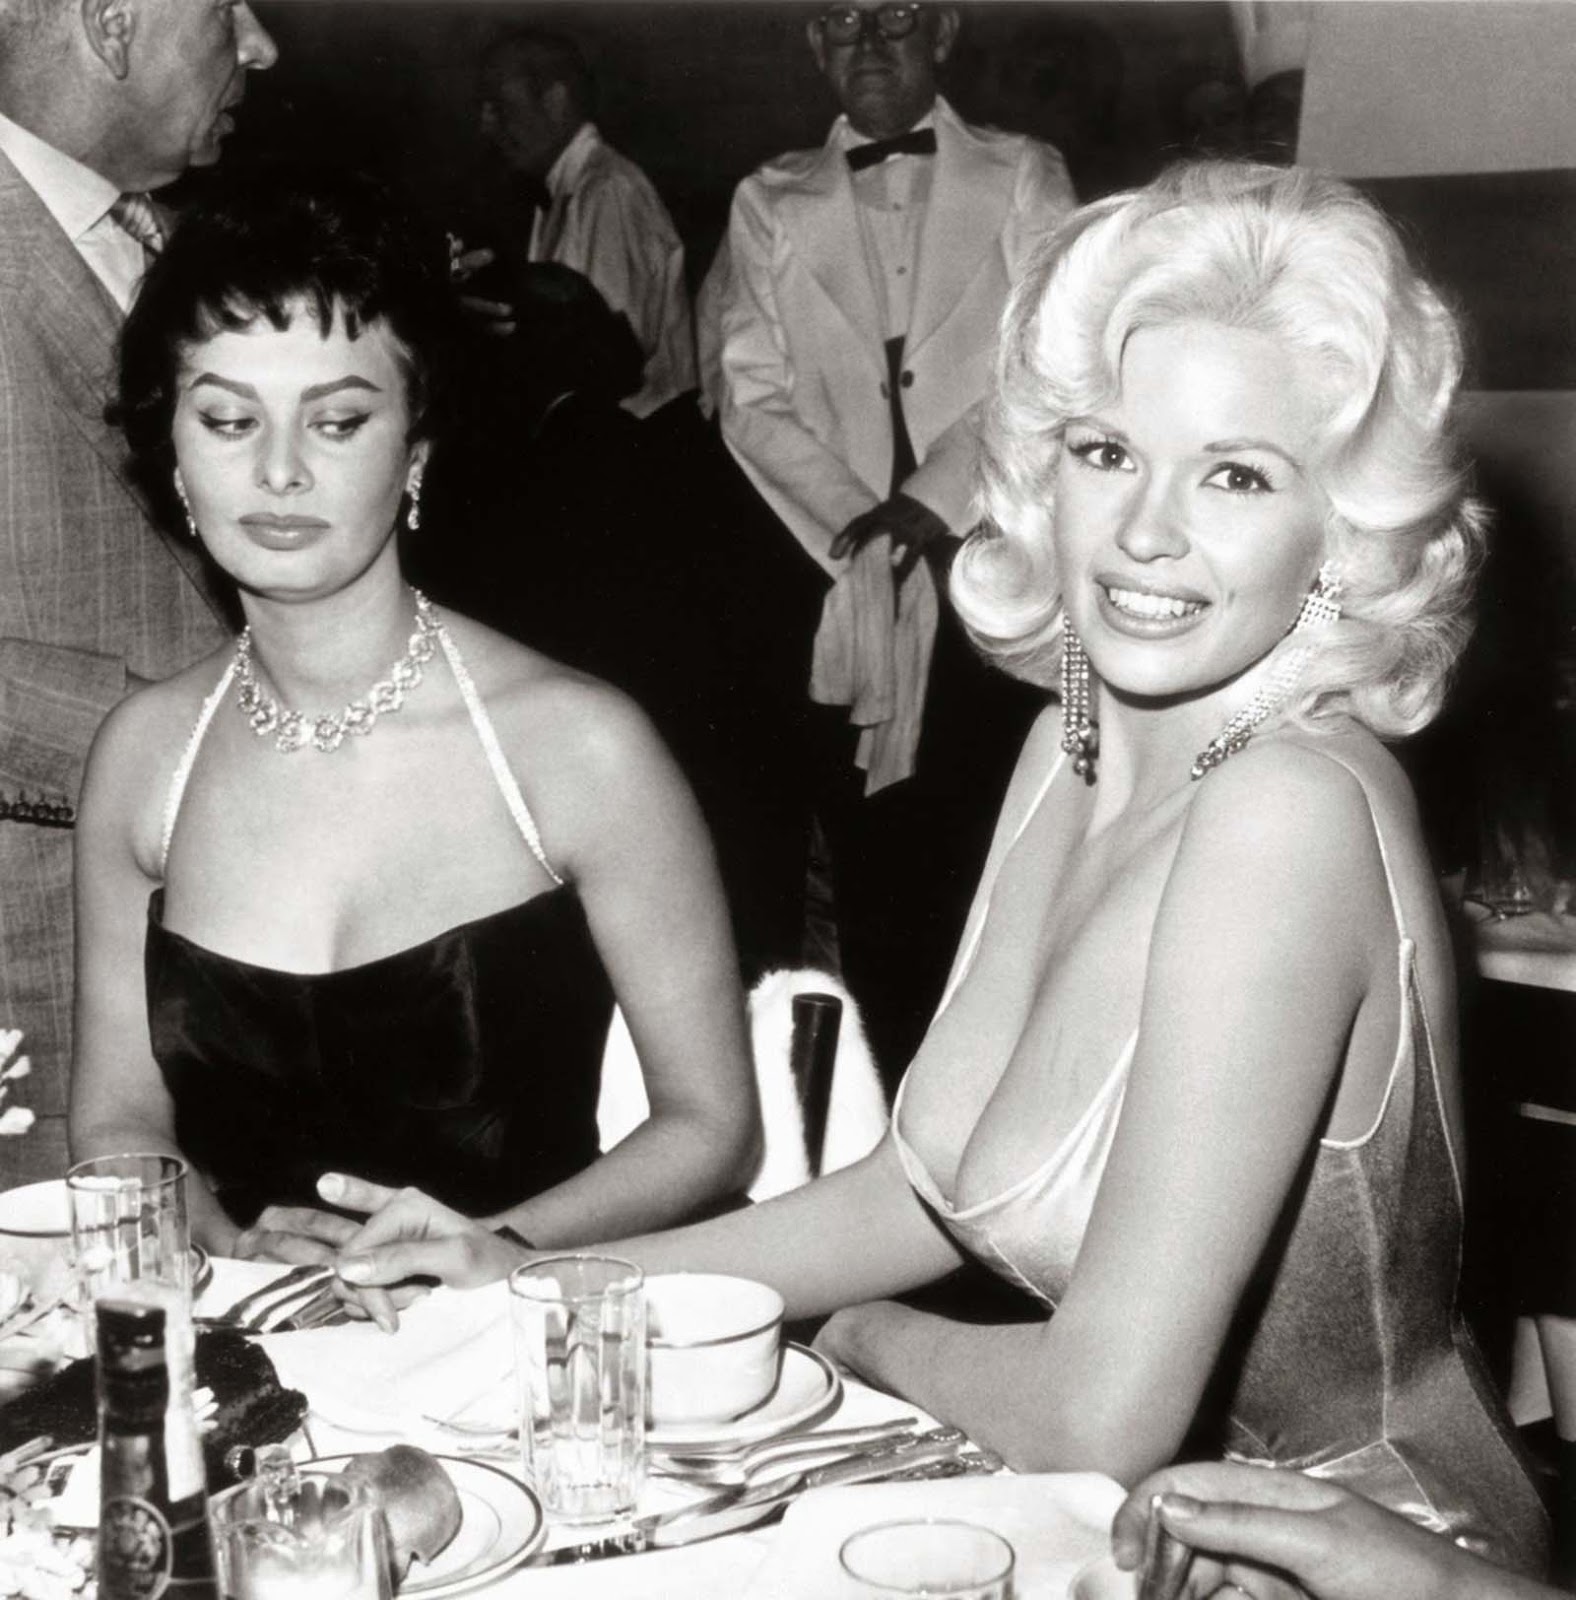 Sophia Loren giving Jayne Mansfield some serious side-eye